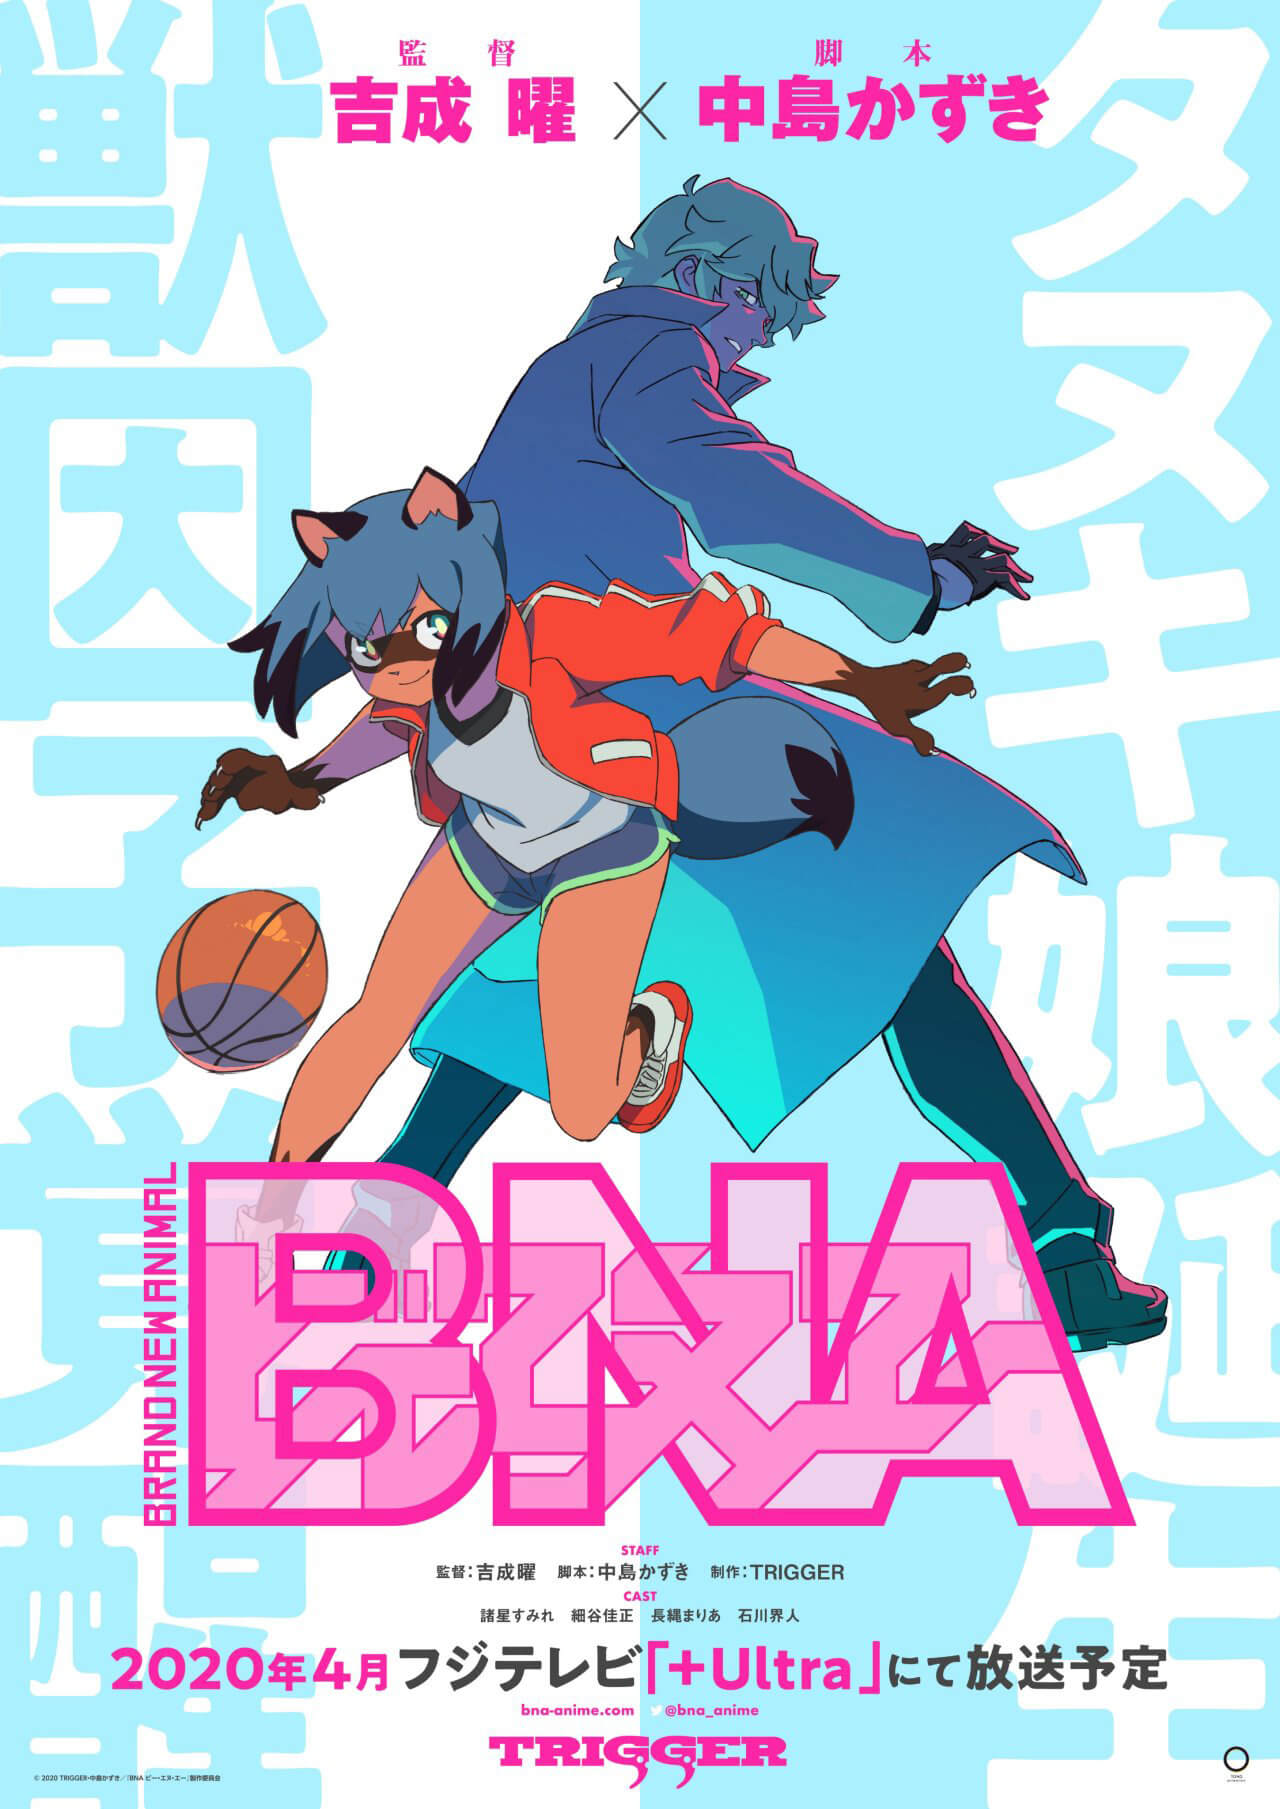 BNA – Brand New Animal